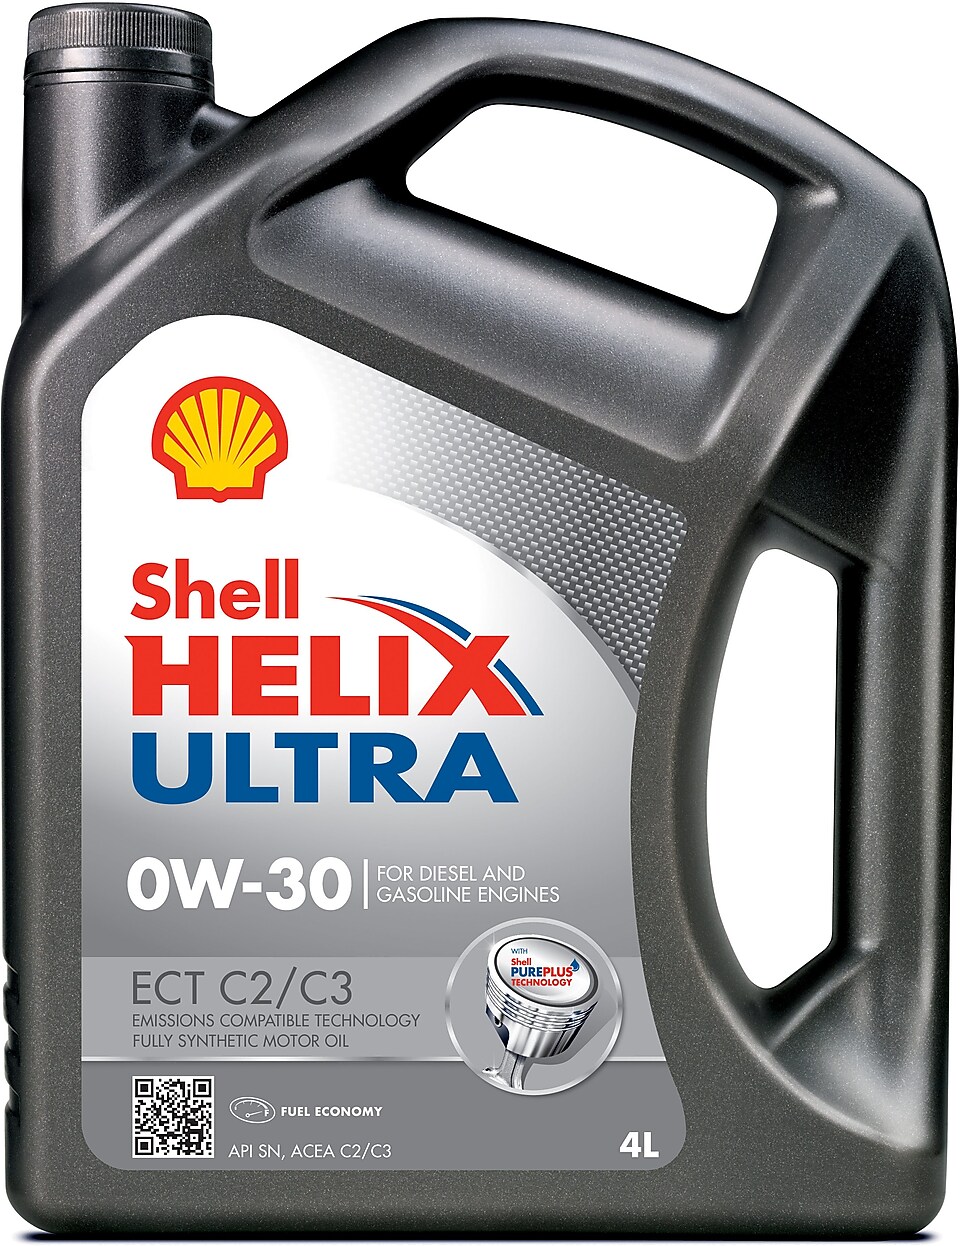 Shell Helix ultra 0W-30 engine oil